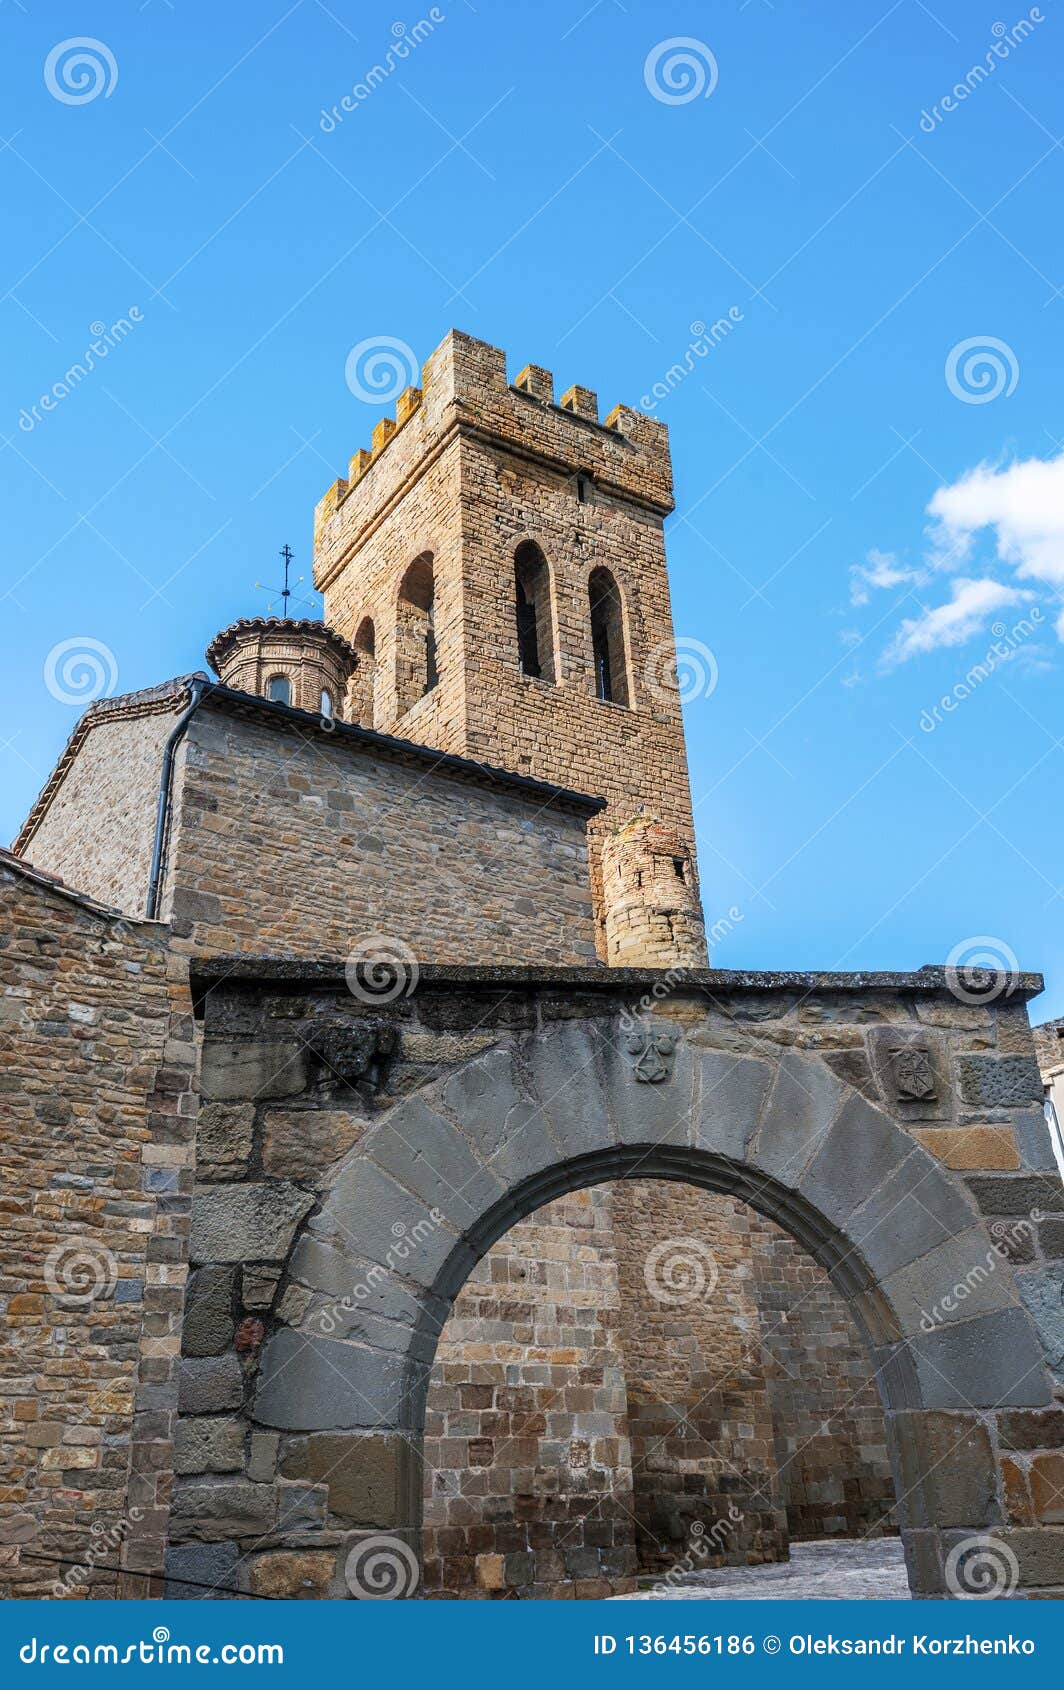 oman style church santiago apostol in sanguesa town of spanish navarra